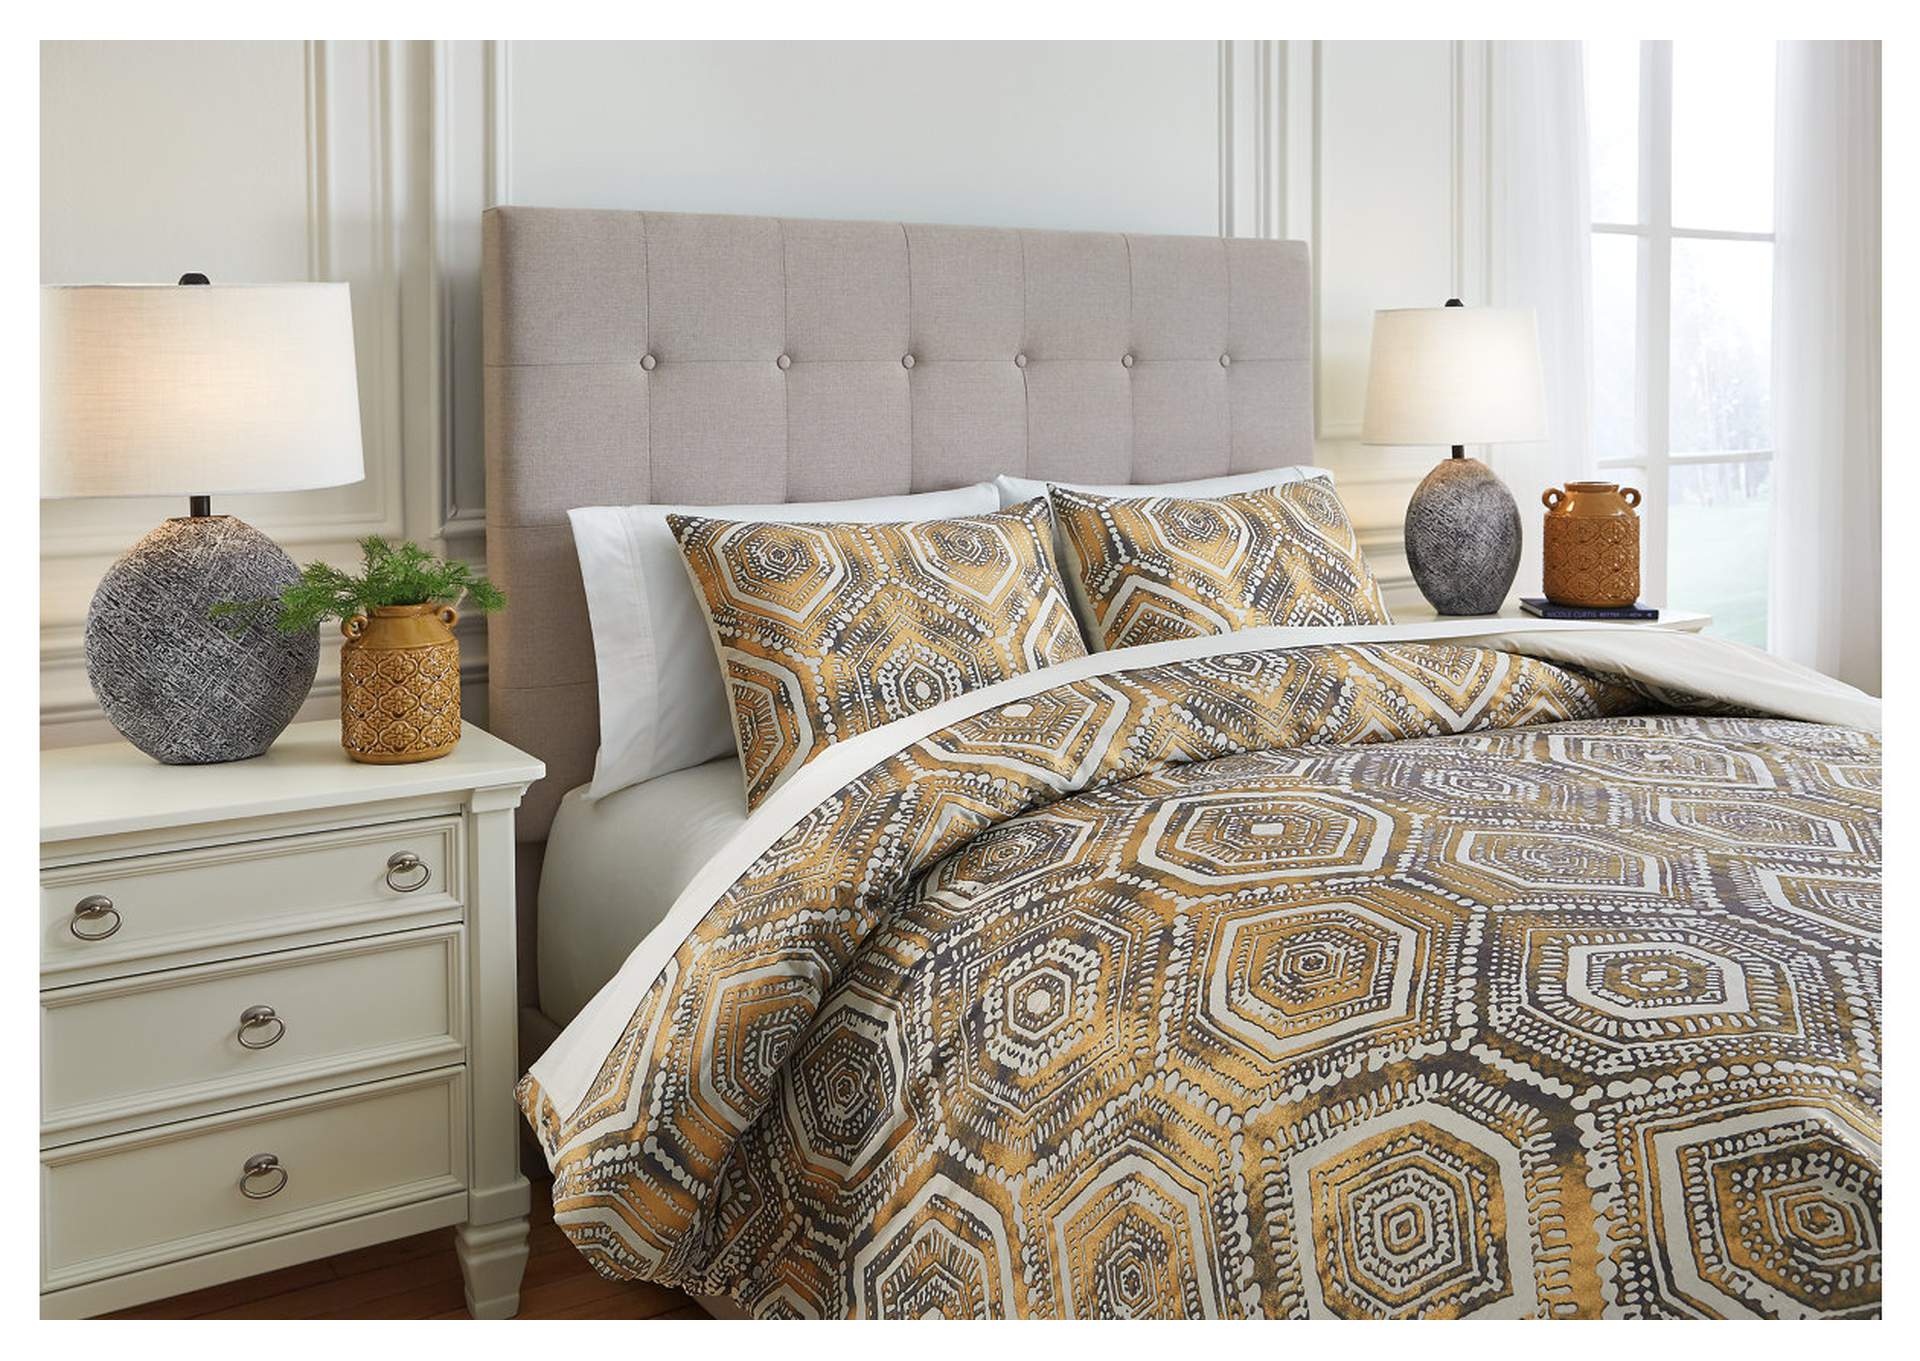 Eilena Queen Comforter Set,Signature Design By Ashley